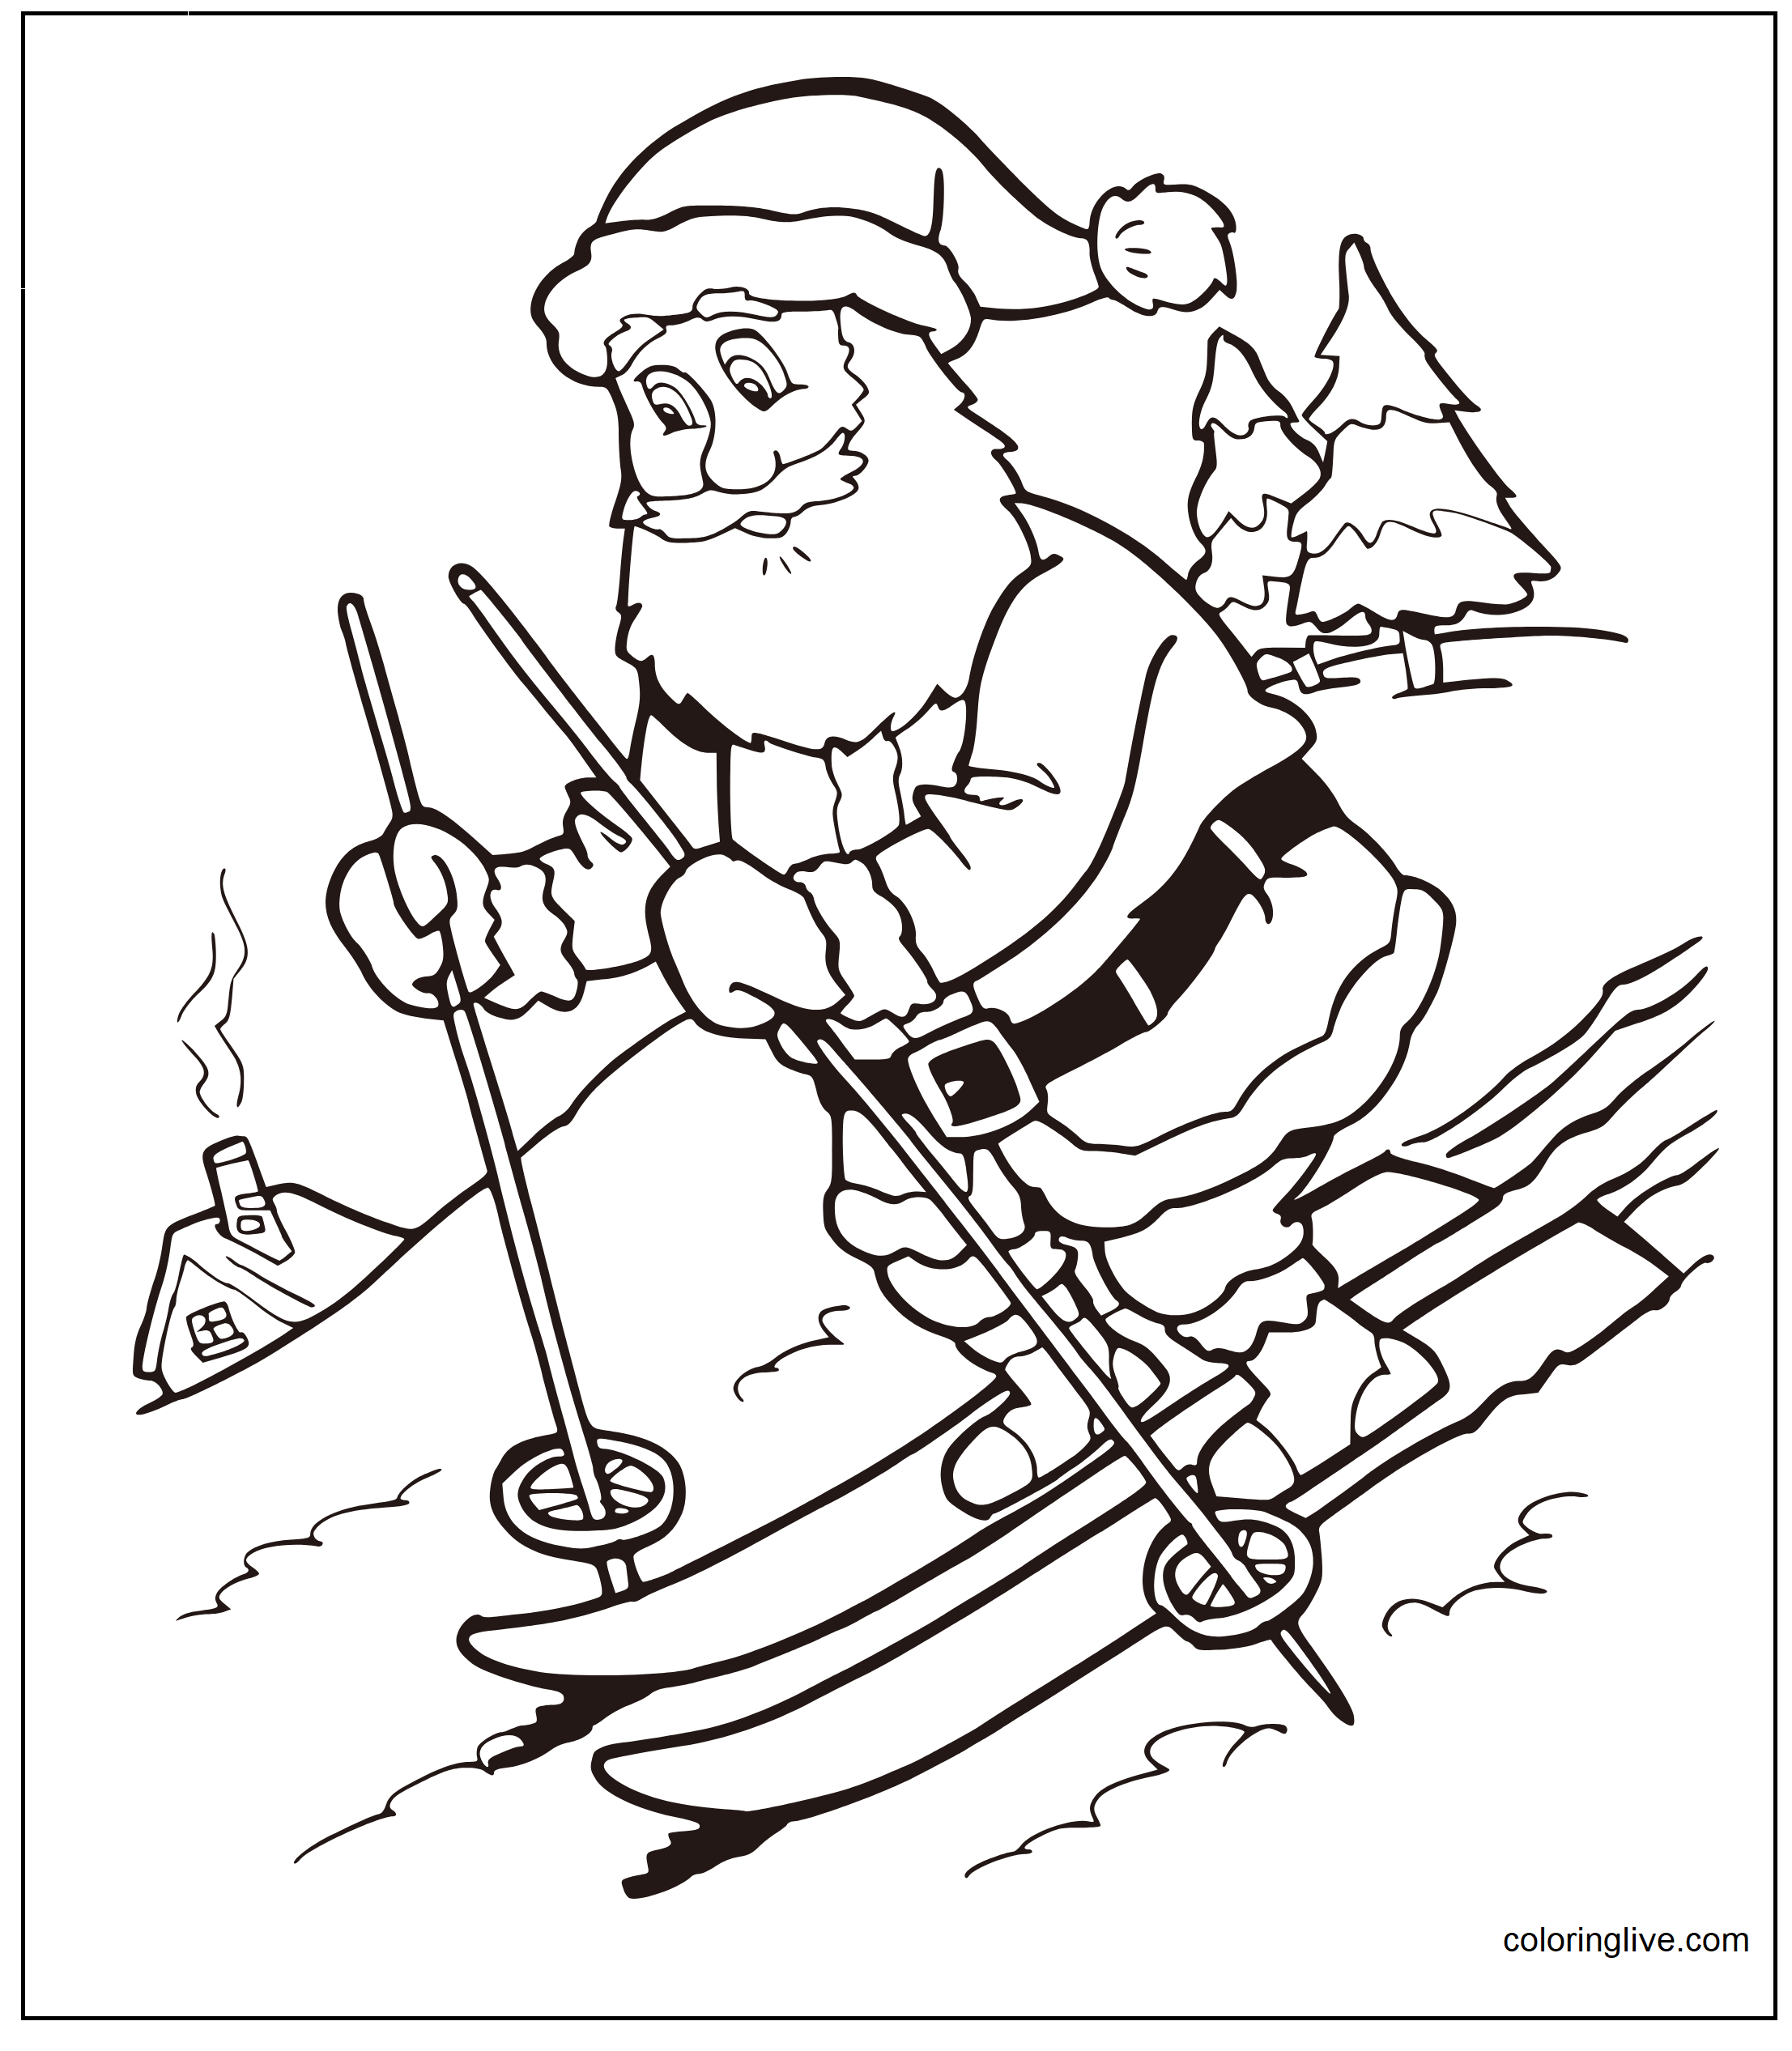 Printable Santa is skiing  sheet Coloring Page for kids.